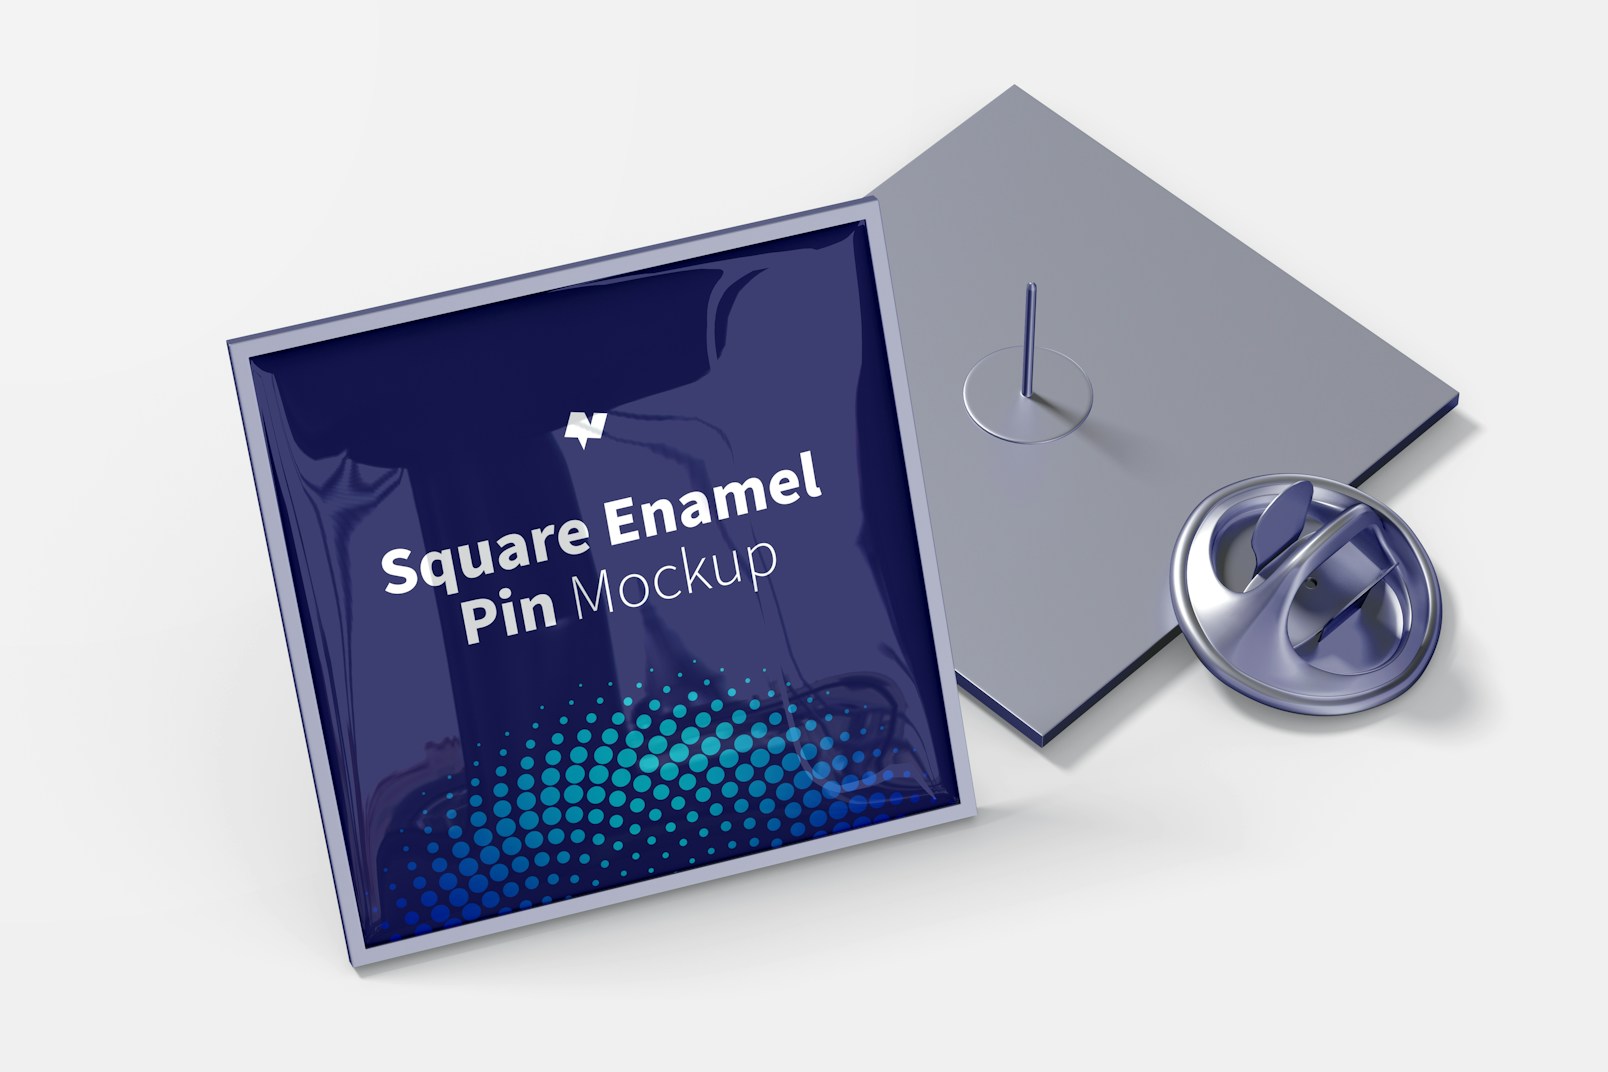 Square Enamel Pins Mockup